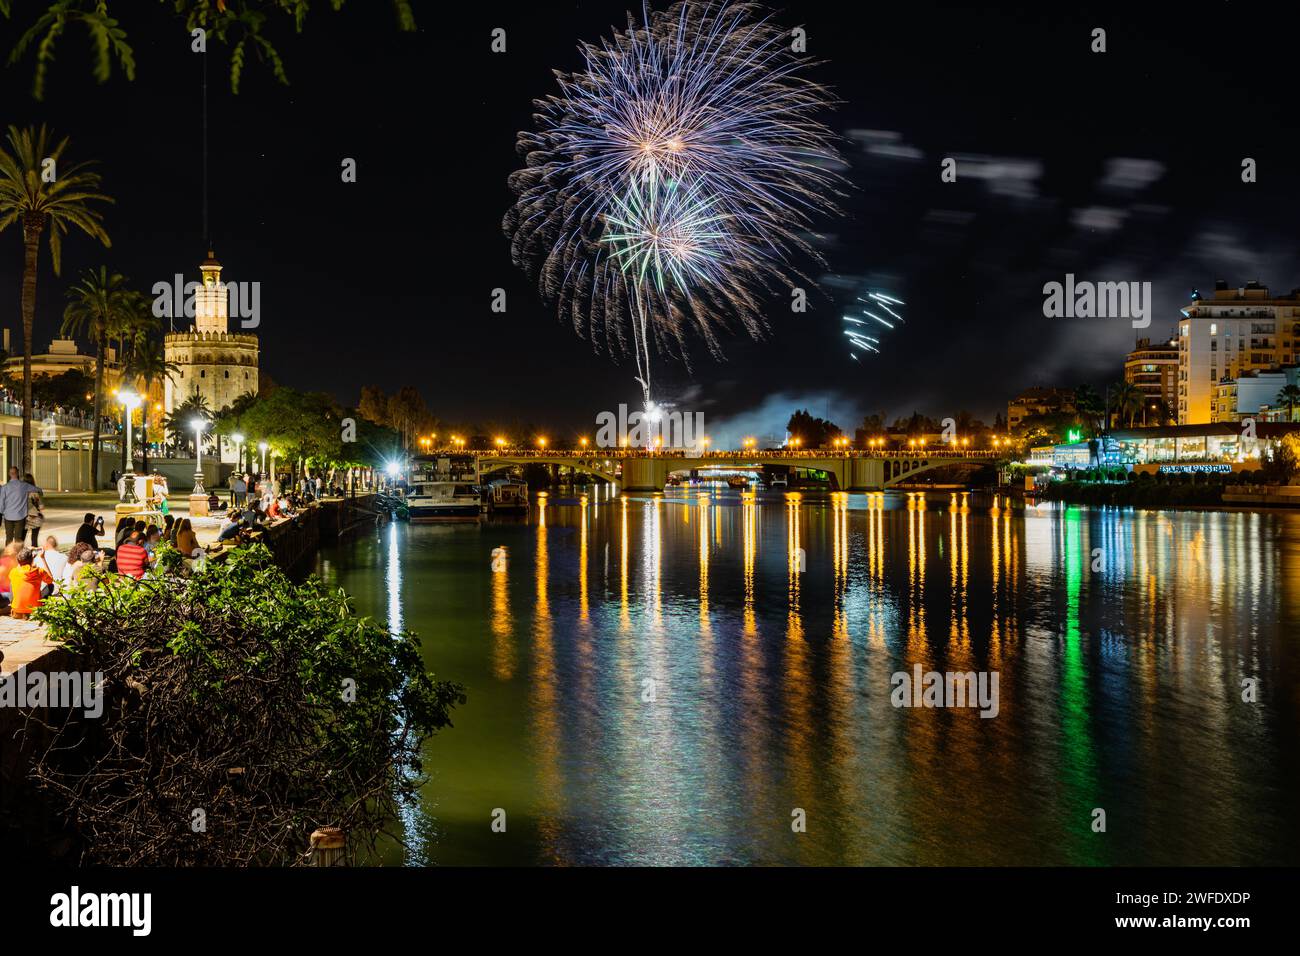 Feuerwerk Ende April Feria, Sevilla, Spanien Stockfoto